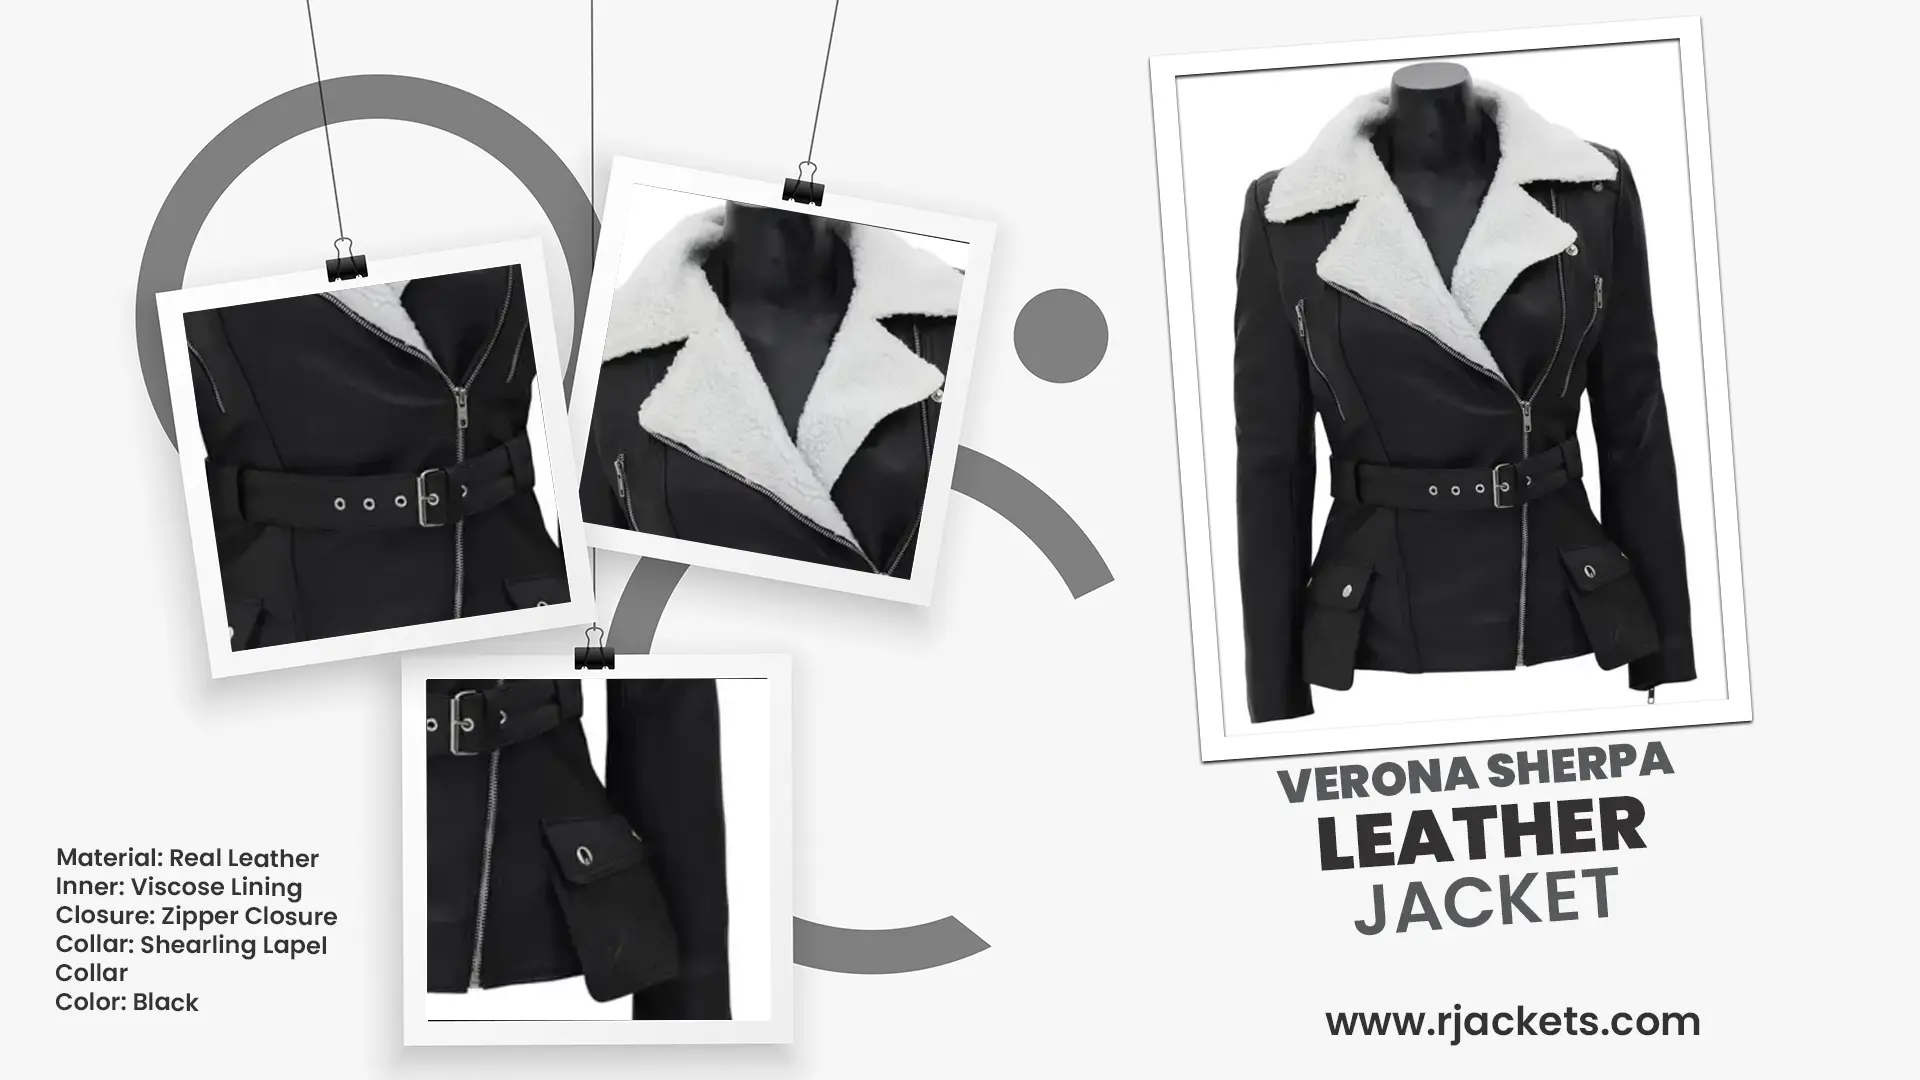 Verona Sherpa Leather Jacket